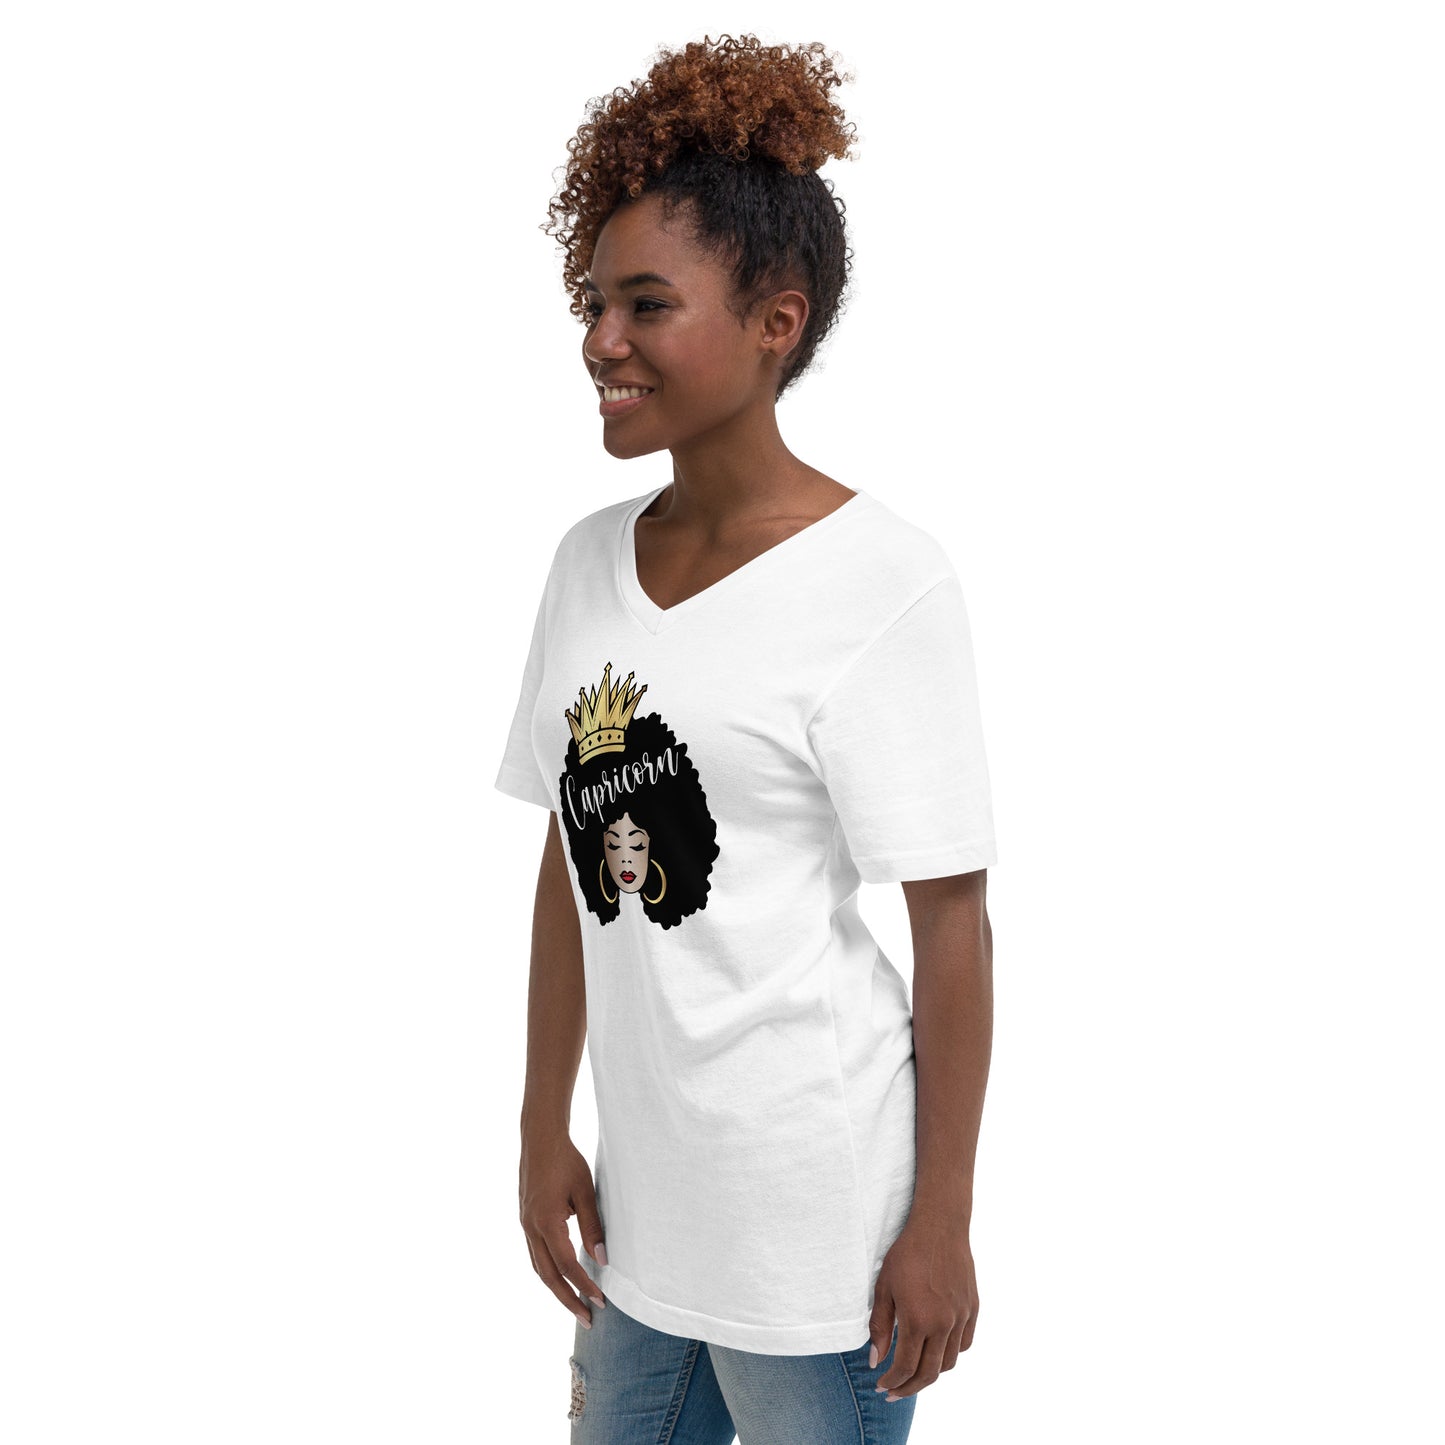 Women's Short Sleeve V-Neck T-Shirt - Capricorn Afro Queen